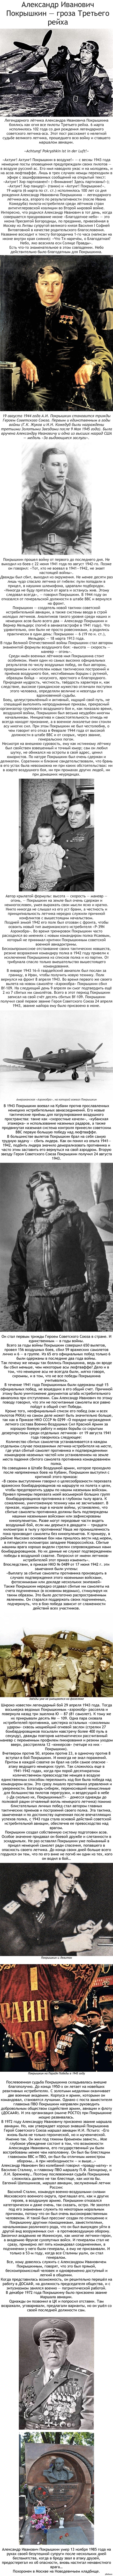 Alexander Ivanovich Pokryshkin - the storm of the Third Reich - Alexander Pokryshkin, Pilots, Heroes, Longpost, The Second World War